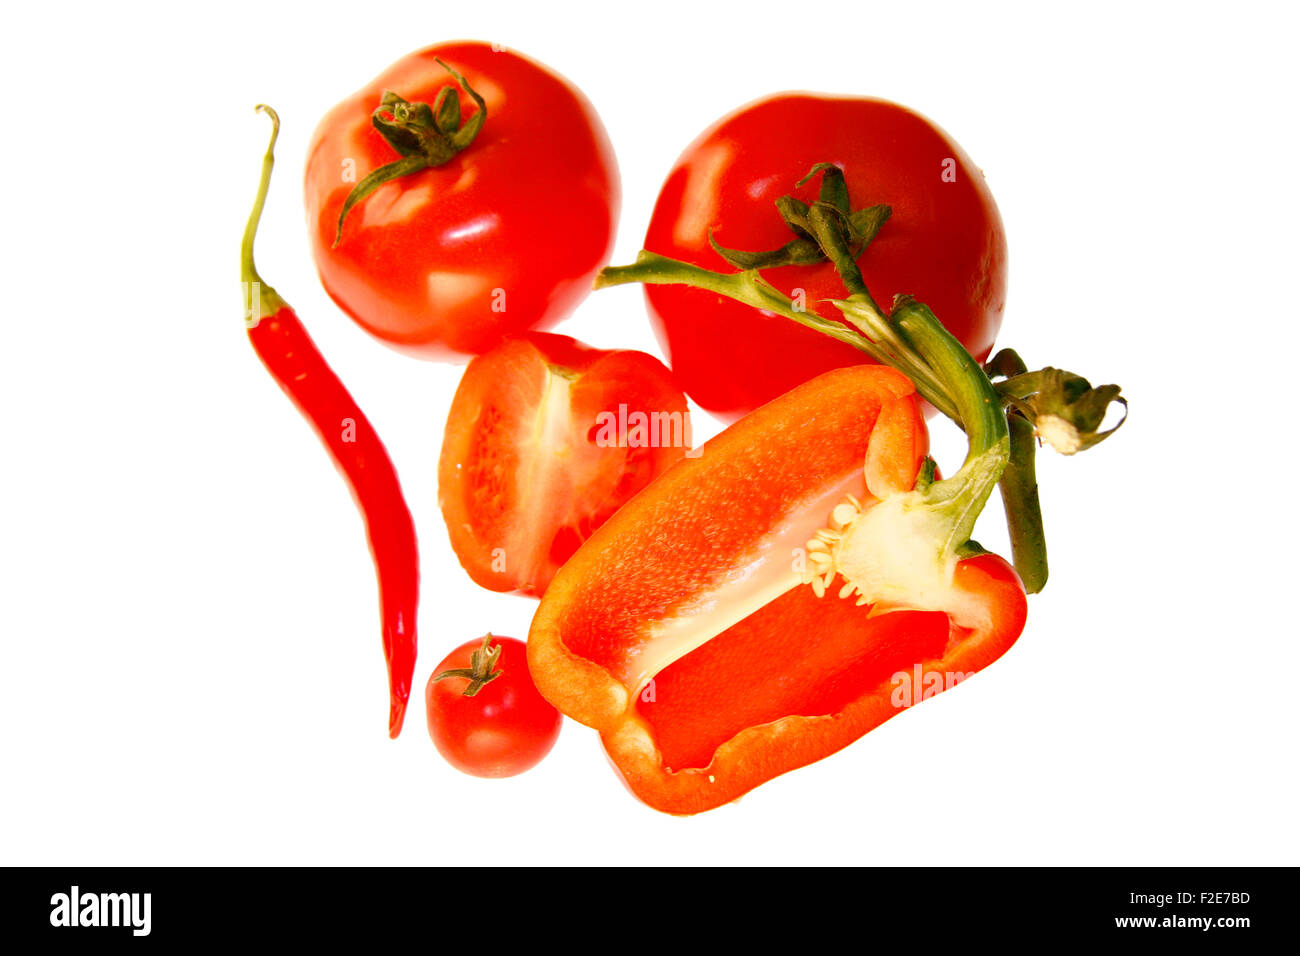 Chilly-Schote, Tomaten, Paprika-Schote - Symbolbild Nahrungsmittel. Stock Photo